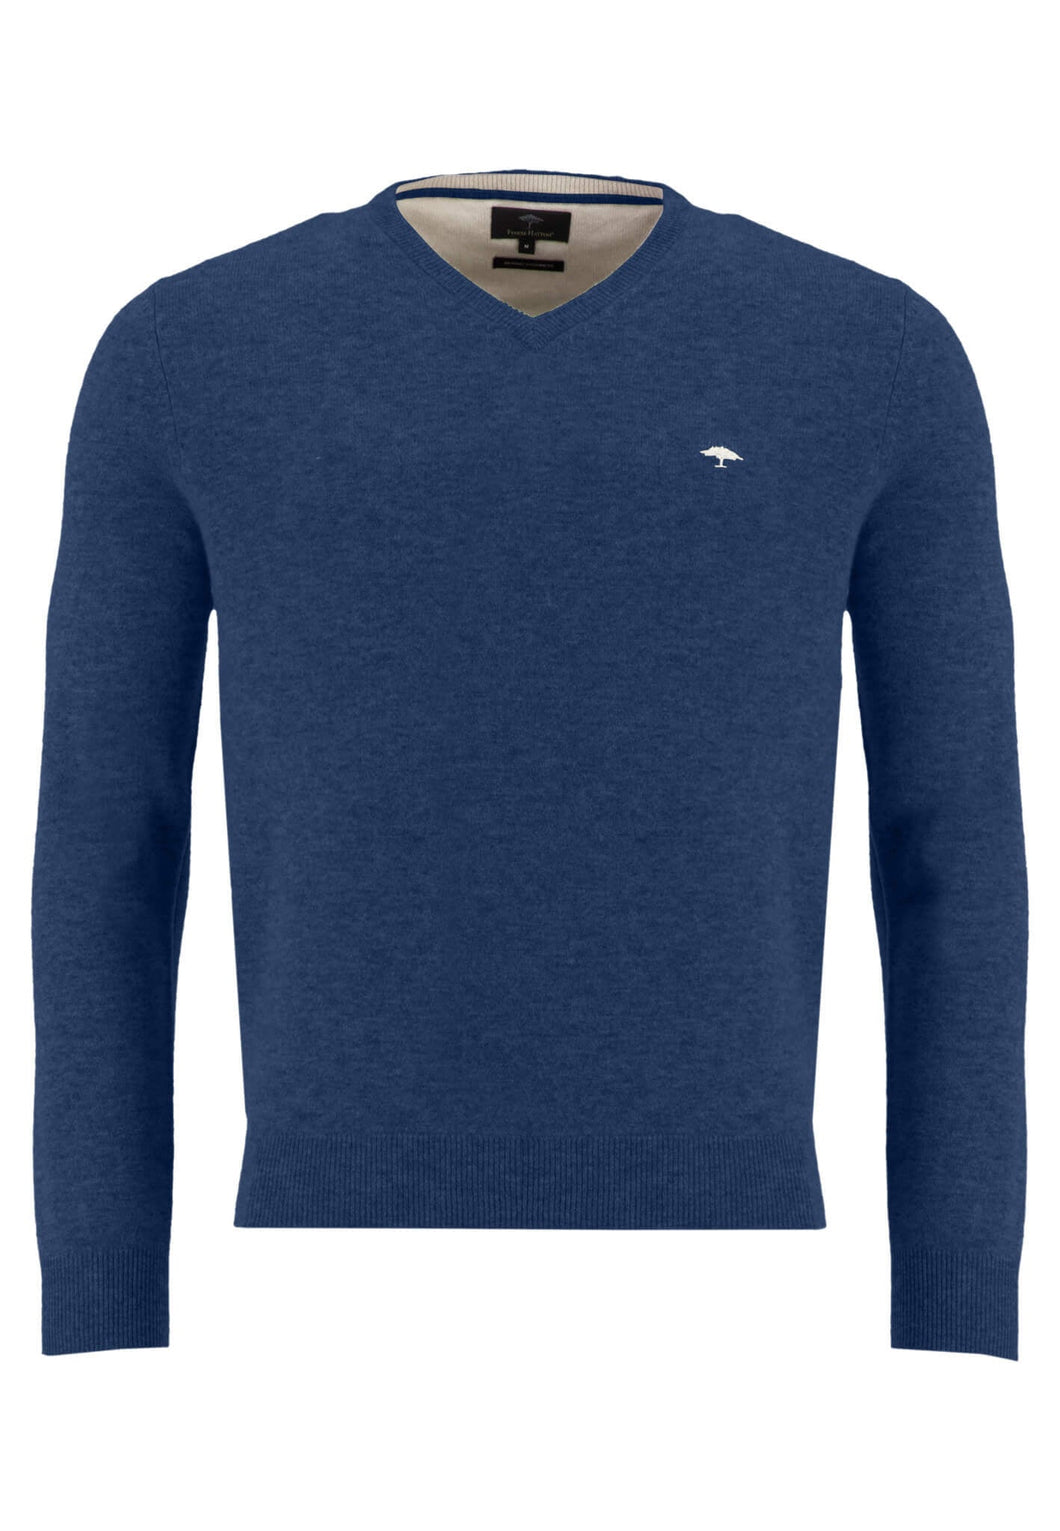 New Fynch Hatton Cashmere/Merino Royal Blue V Neck Sweater